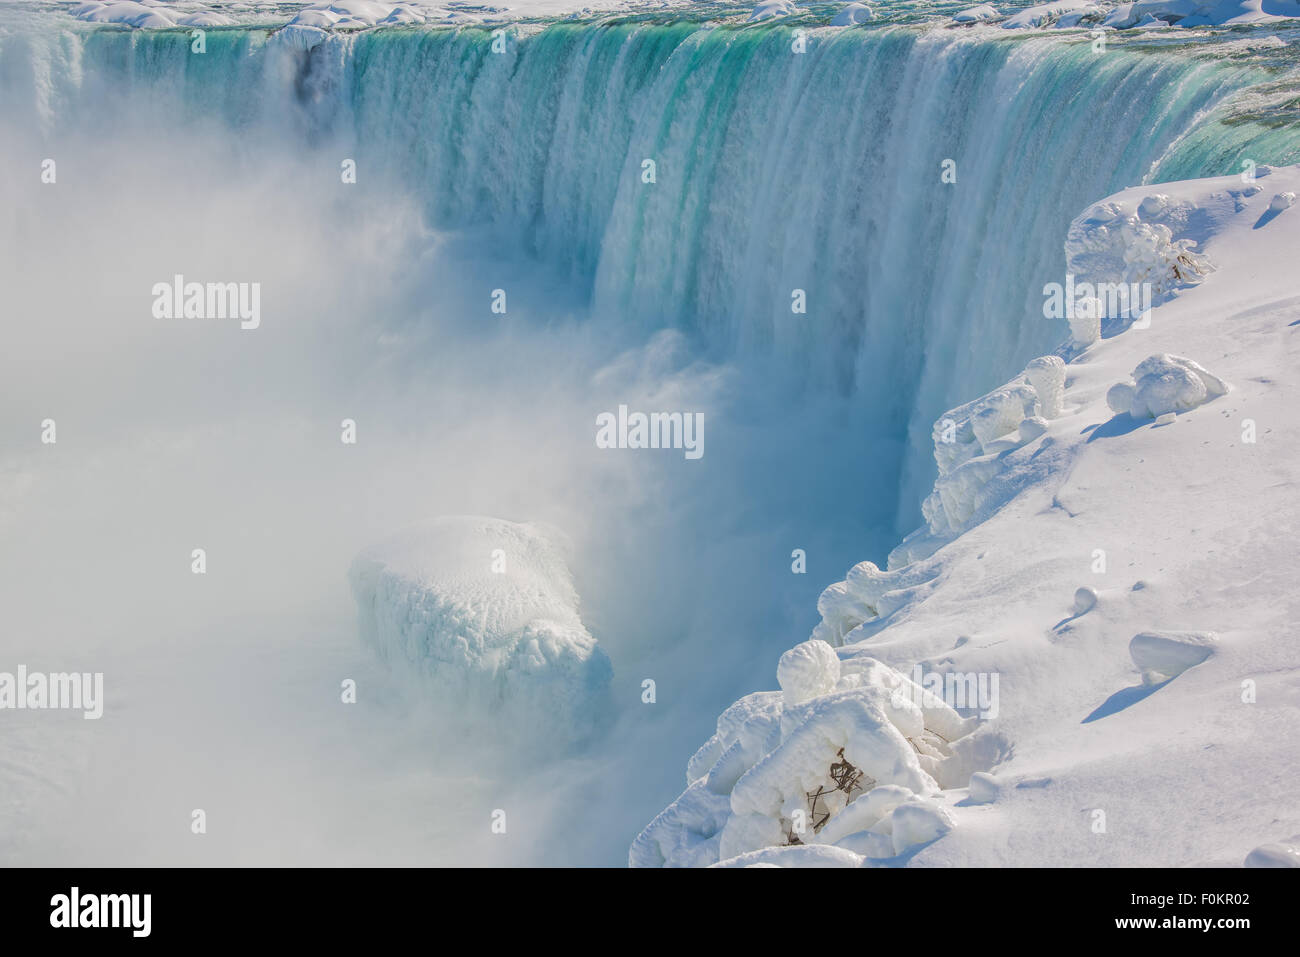 Eine teilweise gefrorenen Hufeisenfälle Einlagen 600.000 Gallonen pro Sekunde in den Niagara River in Niagara Falls, Kanada. Stockfoto